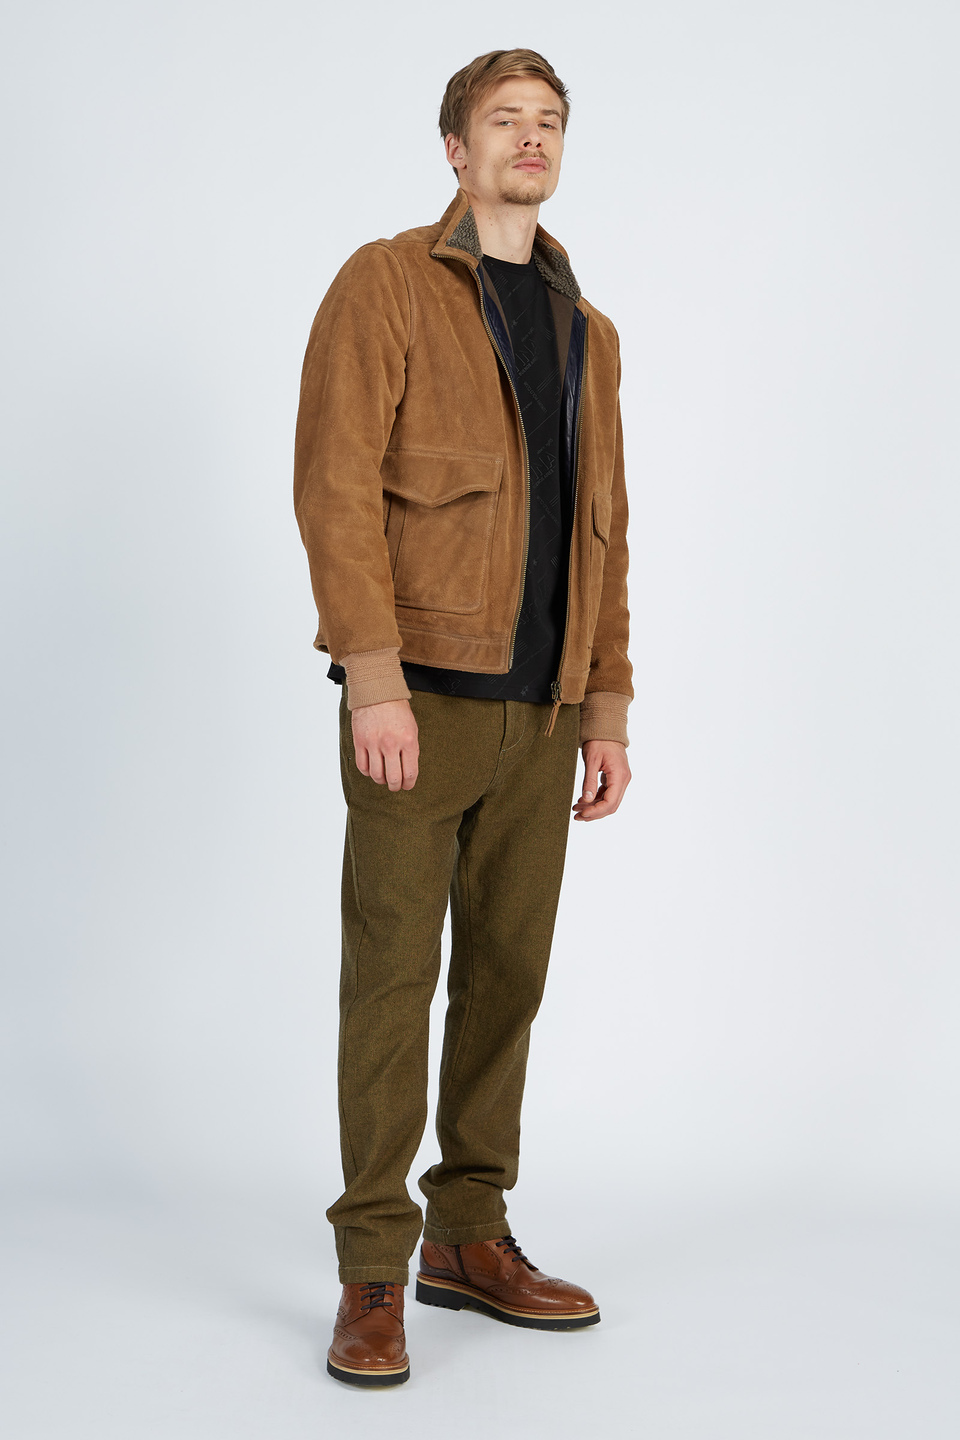 Herrenhose Modell 5 Taschen aus regular fit Baumwolle | La Martina - Official Online Shop